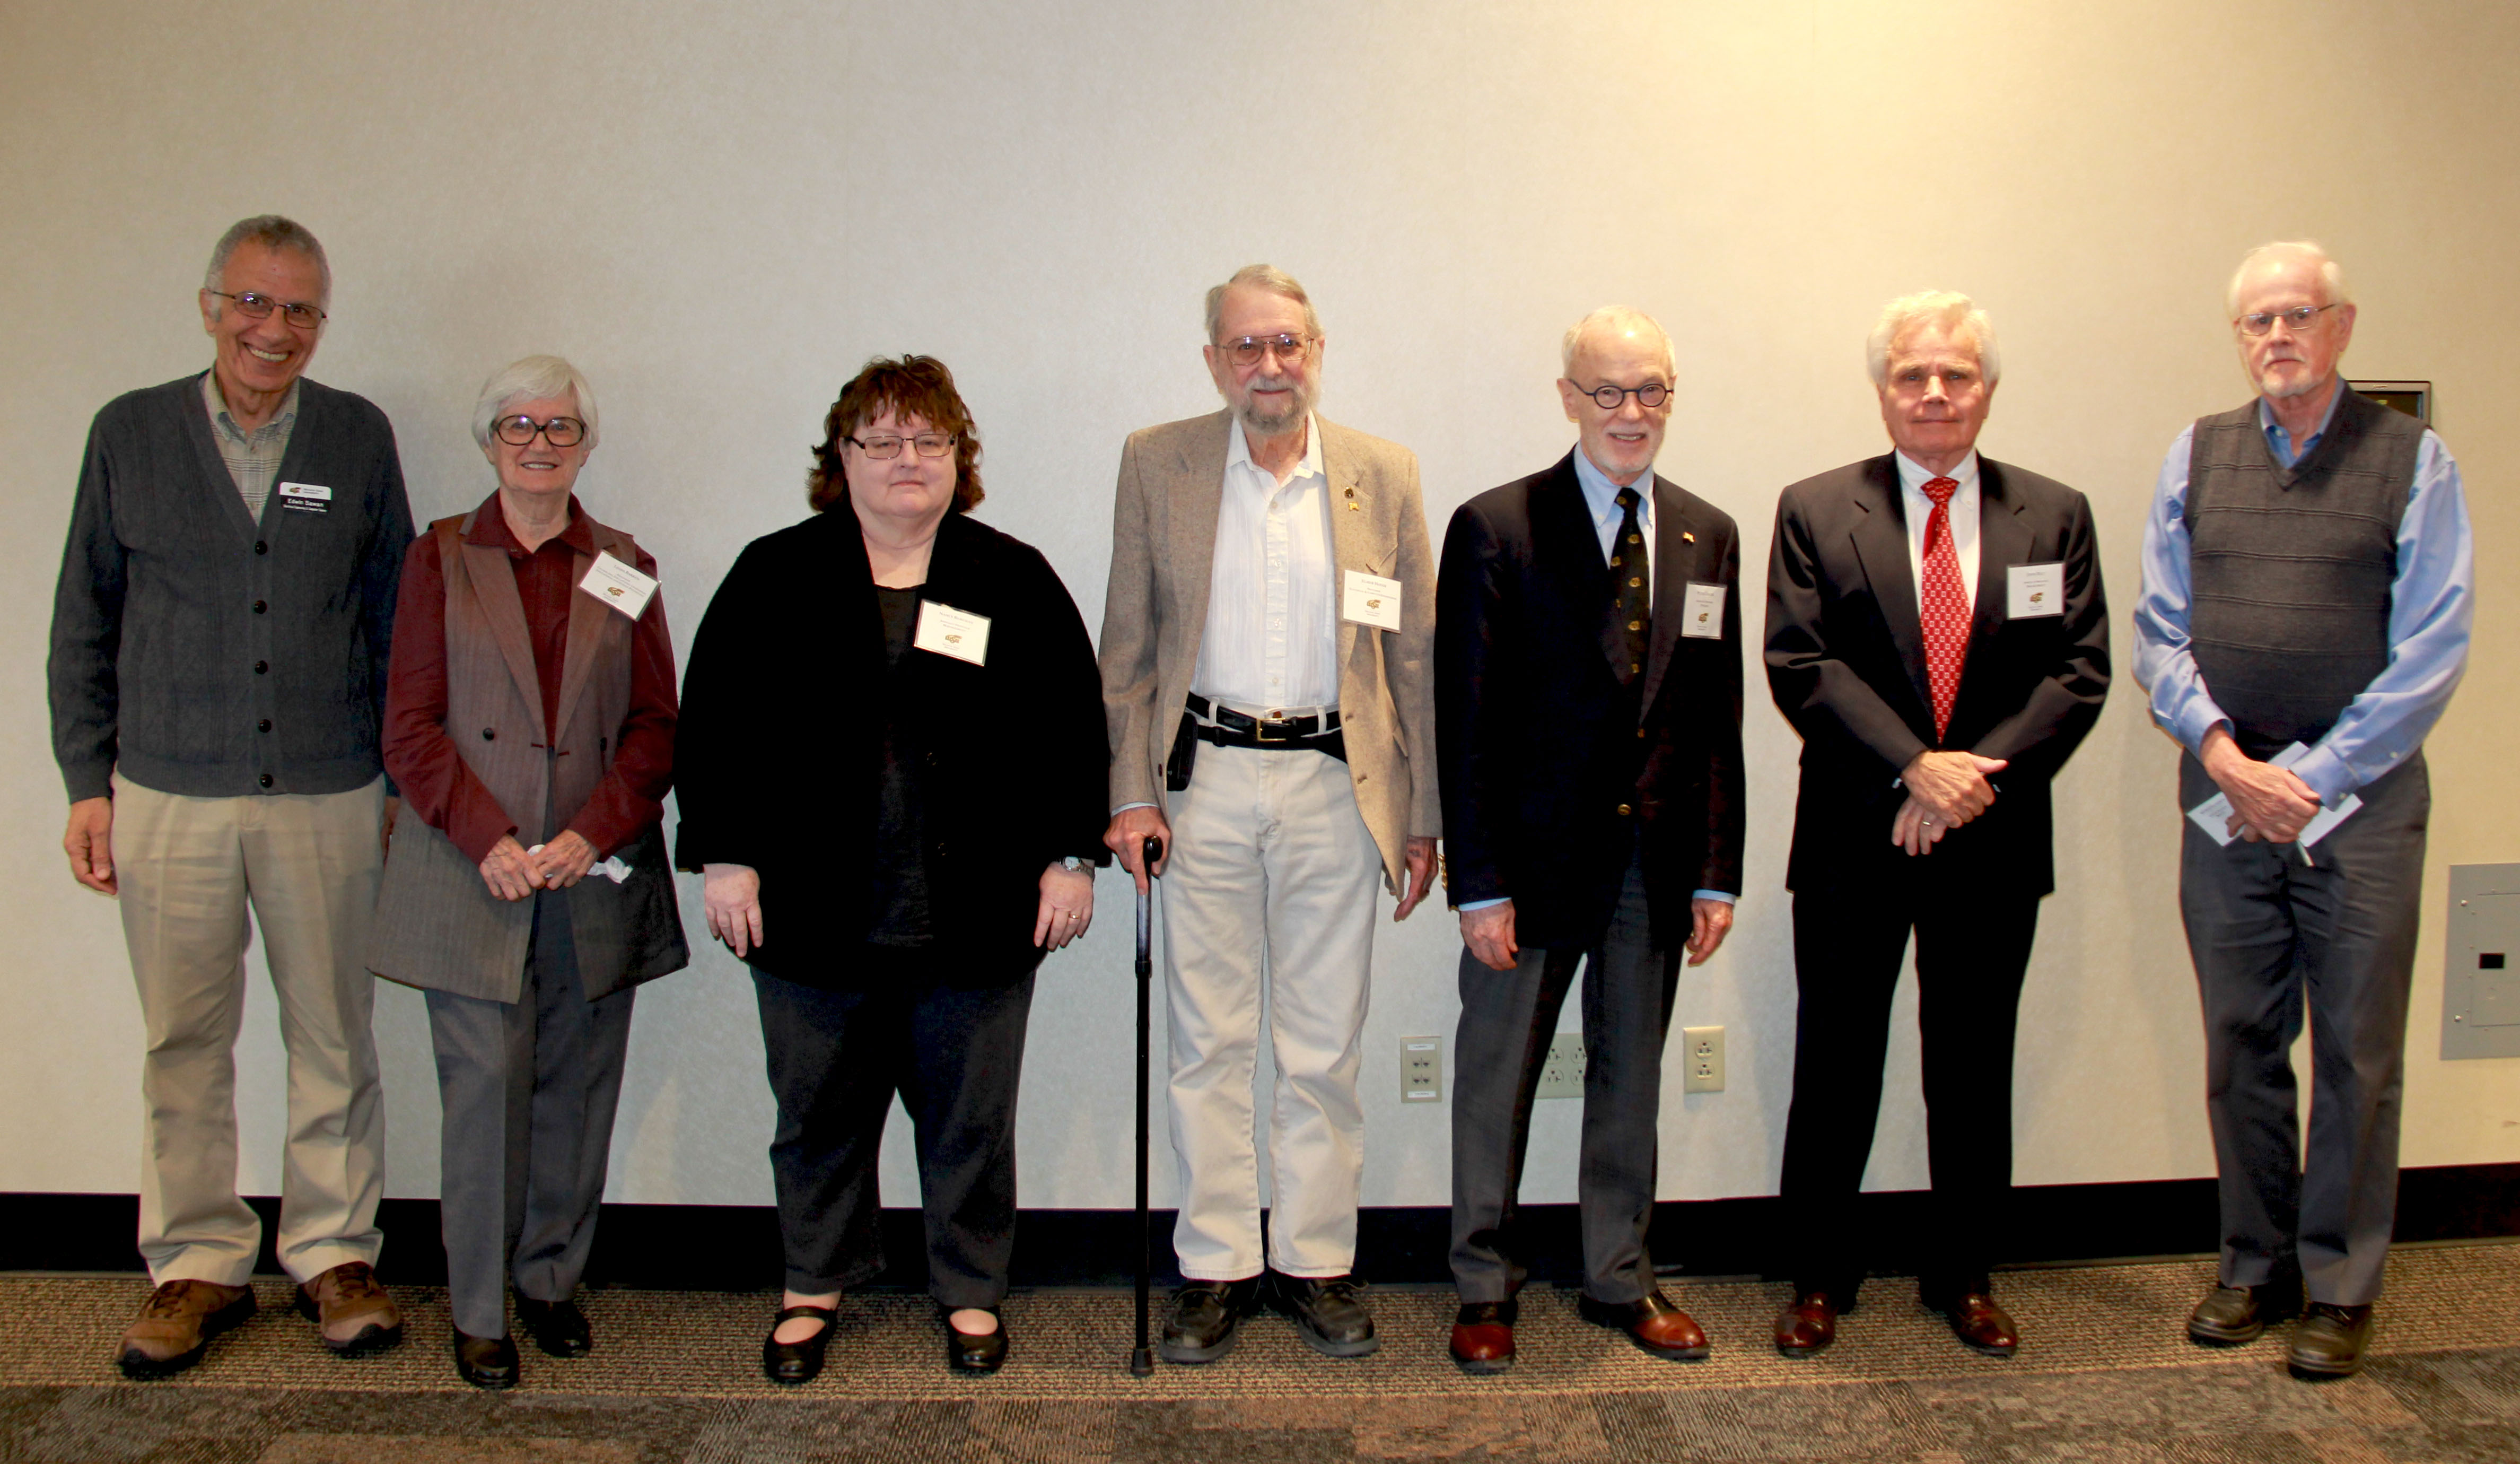 Photo of the Steering Committee - Ed Sawan, Linda Bakken, Nancy Bereman, Elmer Hoyer, Peter Zoller, John Belt, Arthur Youngman. Not shown: William Woods. 